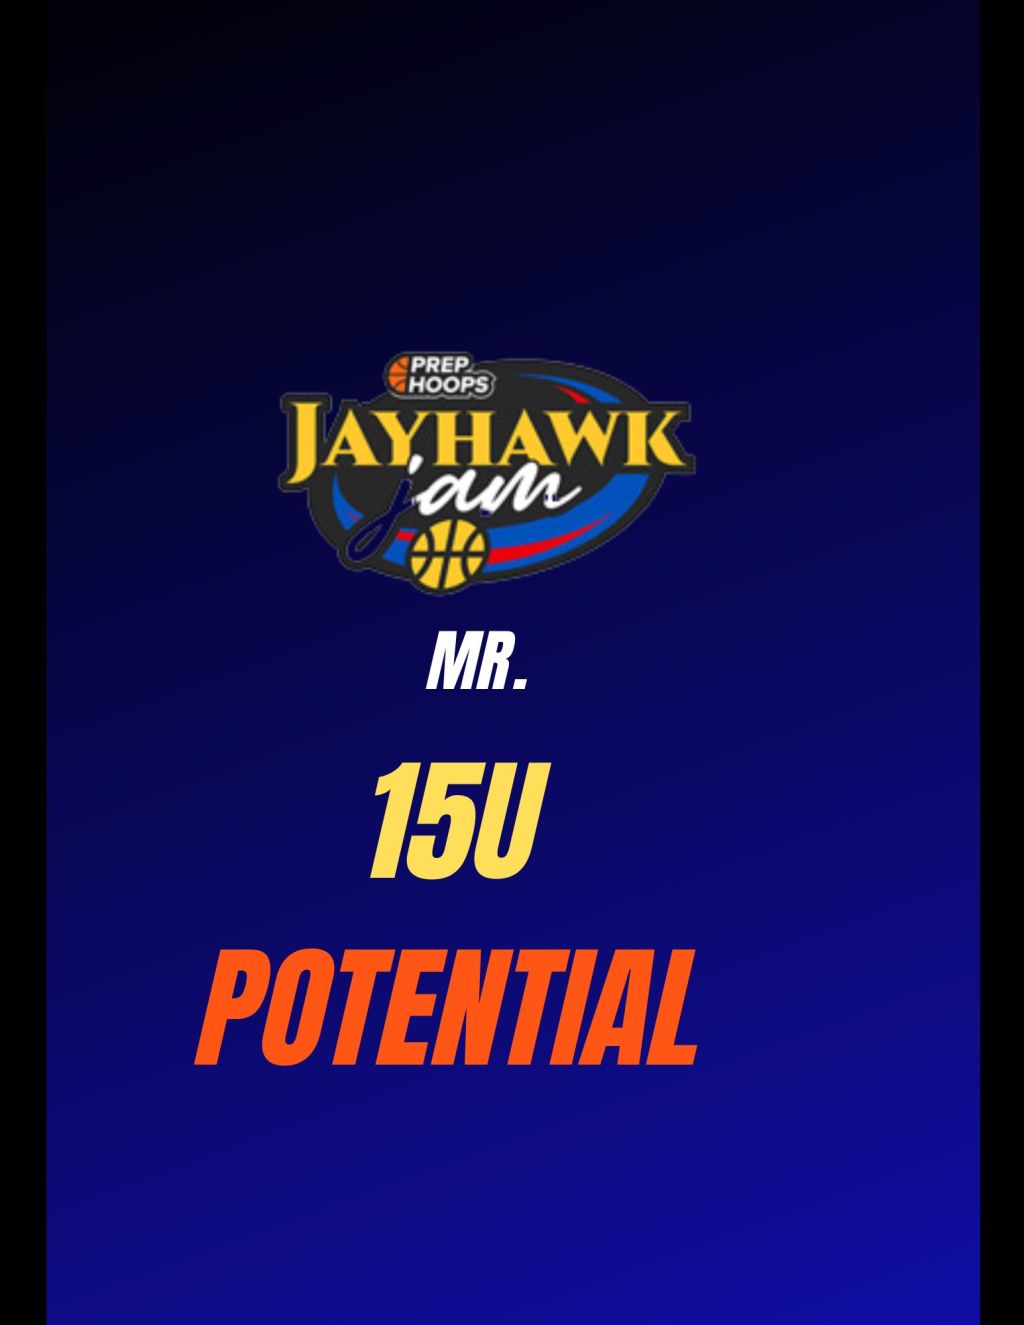 JayHawk Jam: Mr. Potential